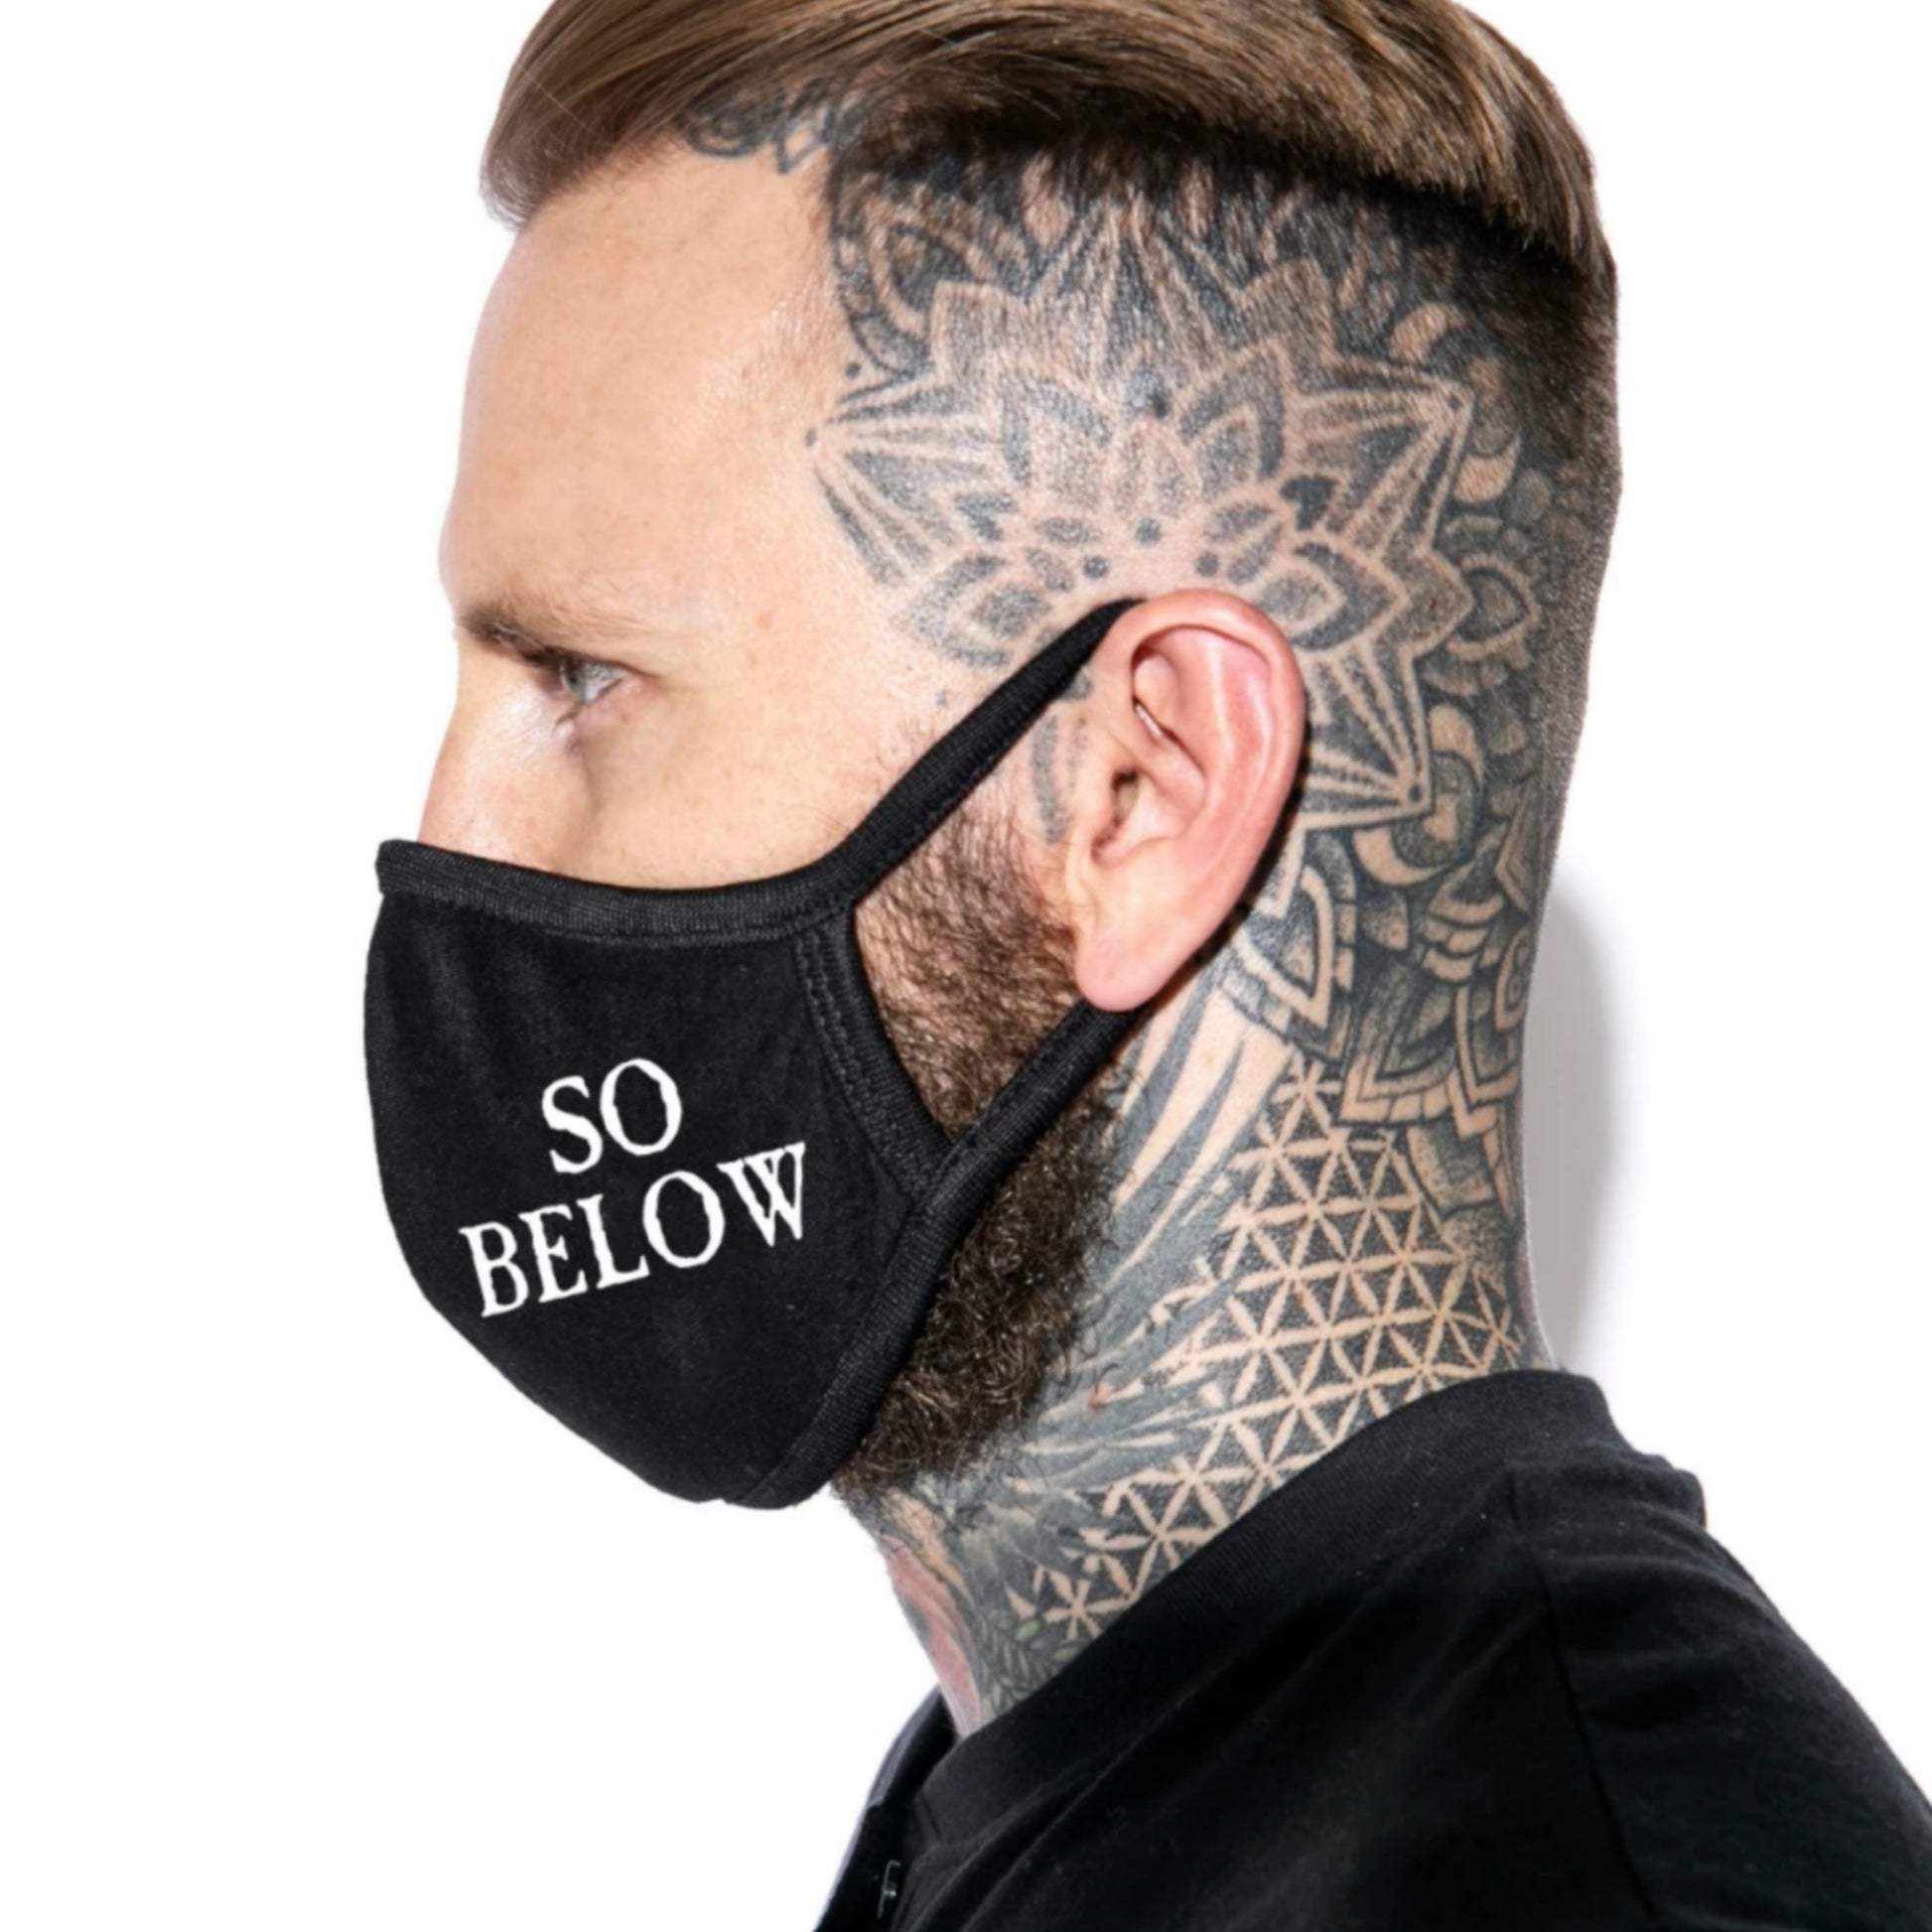 Face Mask | As Above So Below Design On Both Sides 100% Cotton - Blackcraft Cult - Face Masks